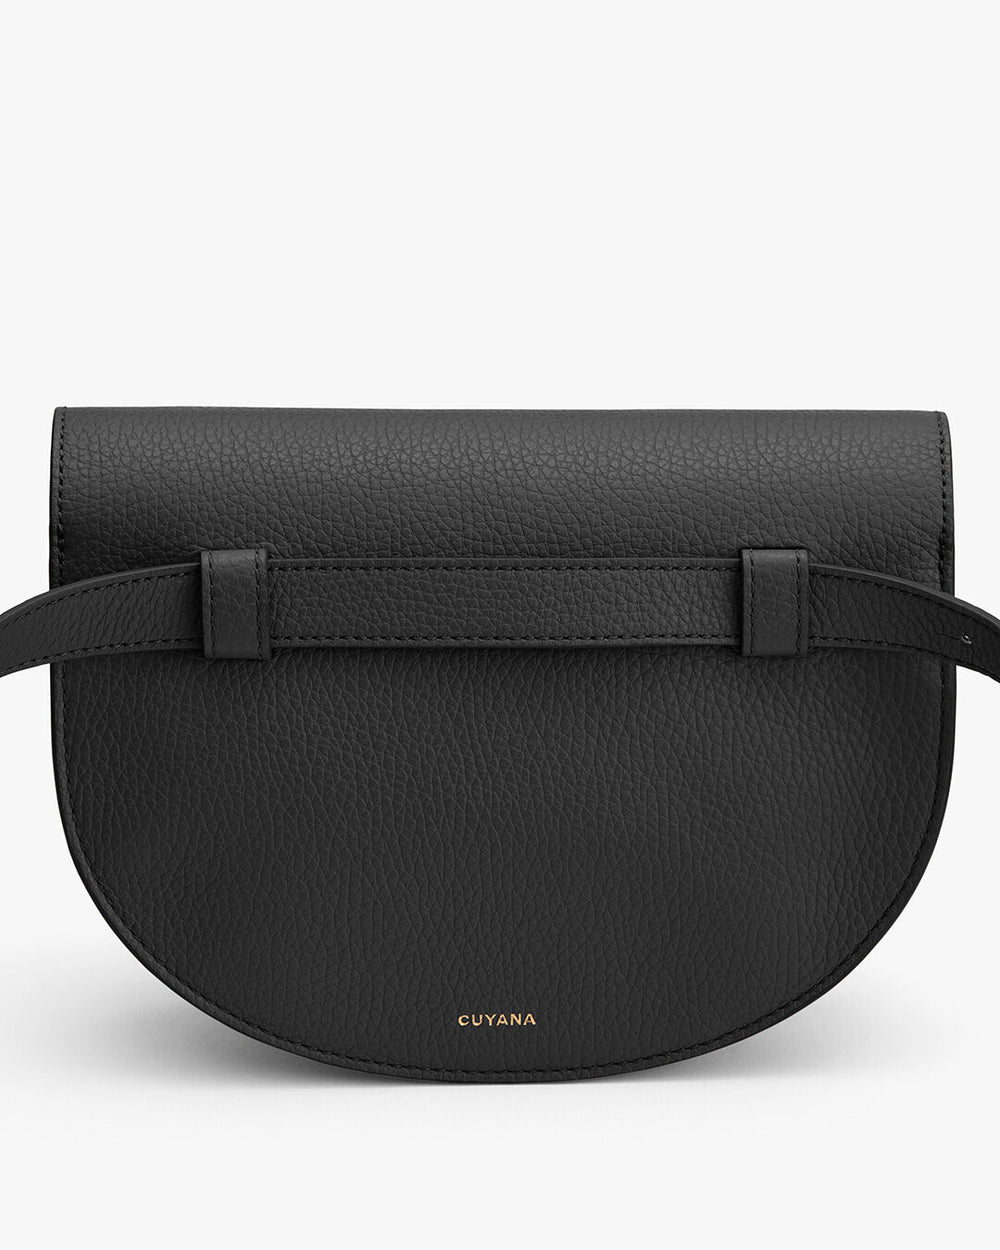 A small semi-circular handbag with a front flap and shoulder strap.